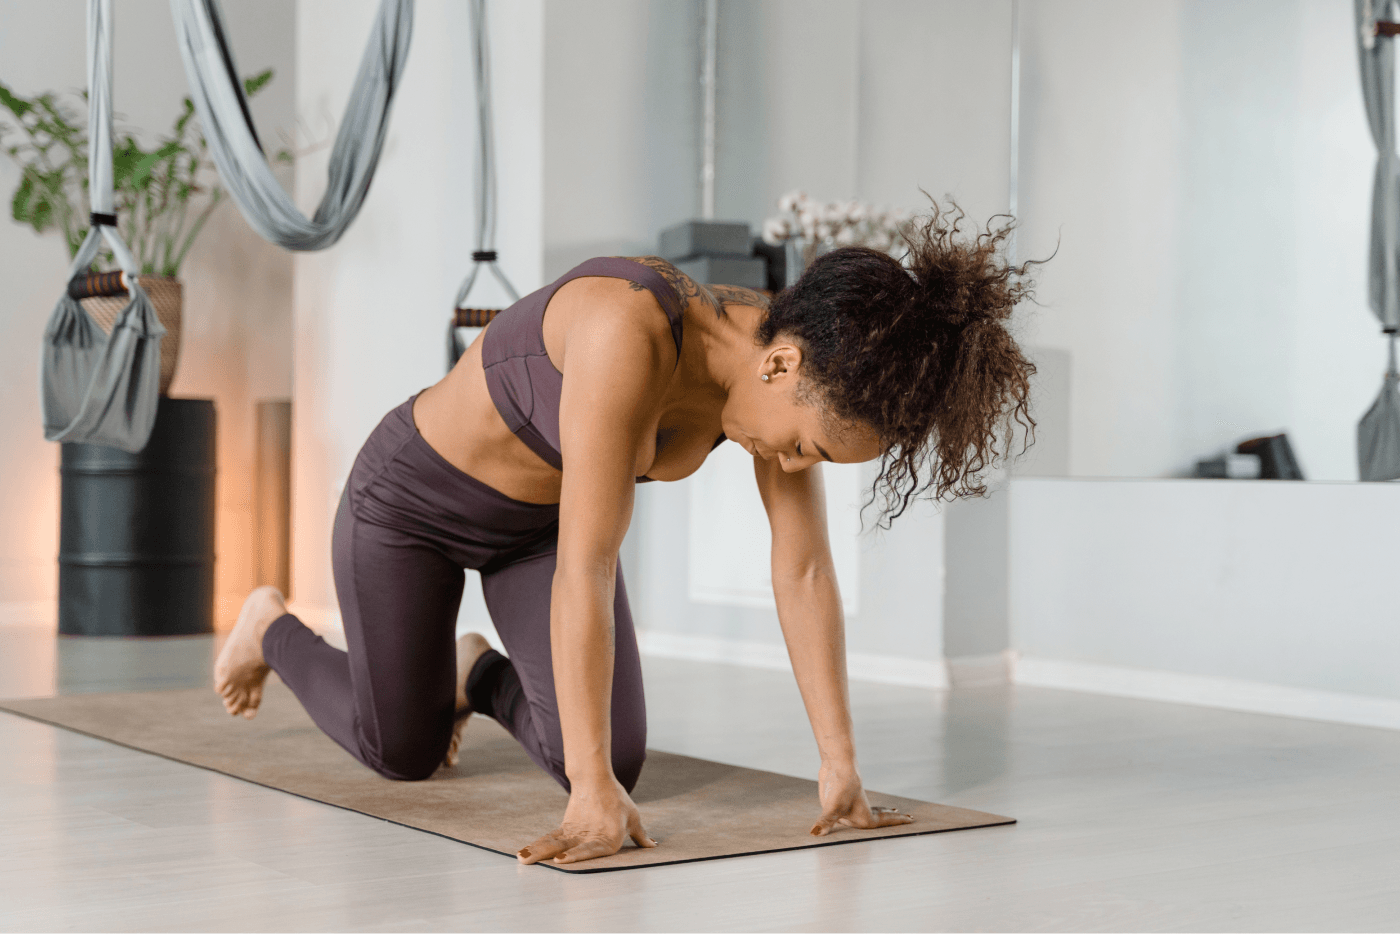 Basic Yoga Poses for Beginners